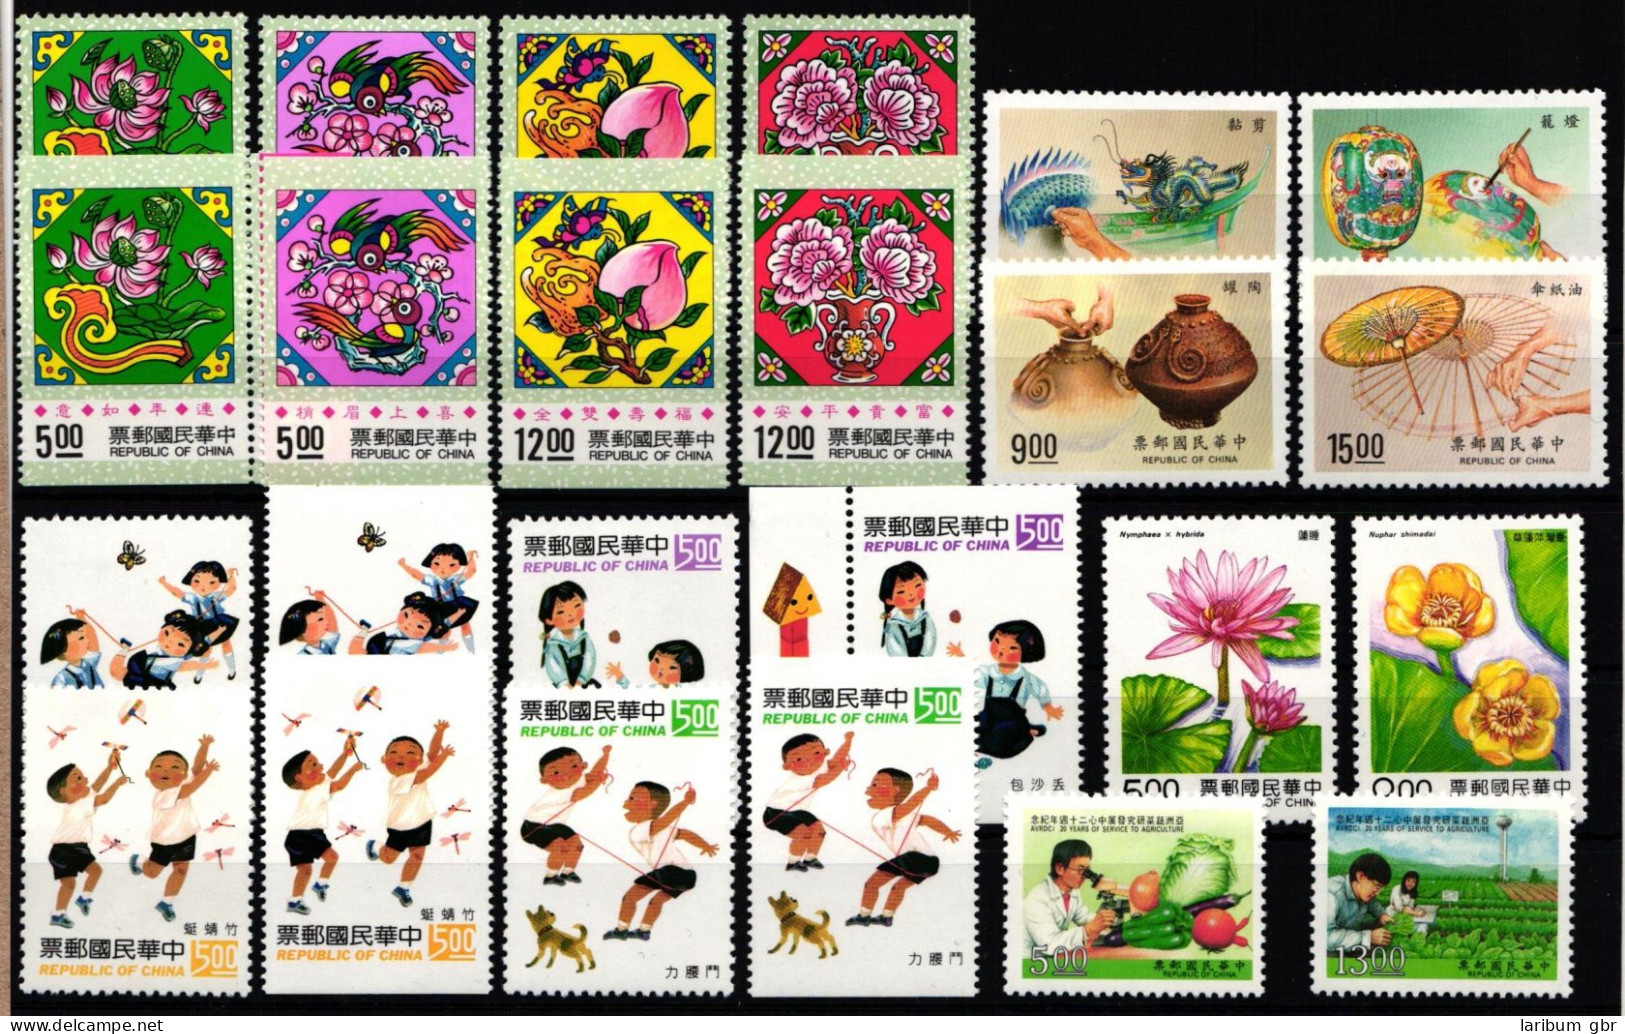 Taiwan Jahrgang 1993 postfrisch #KX862